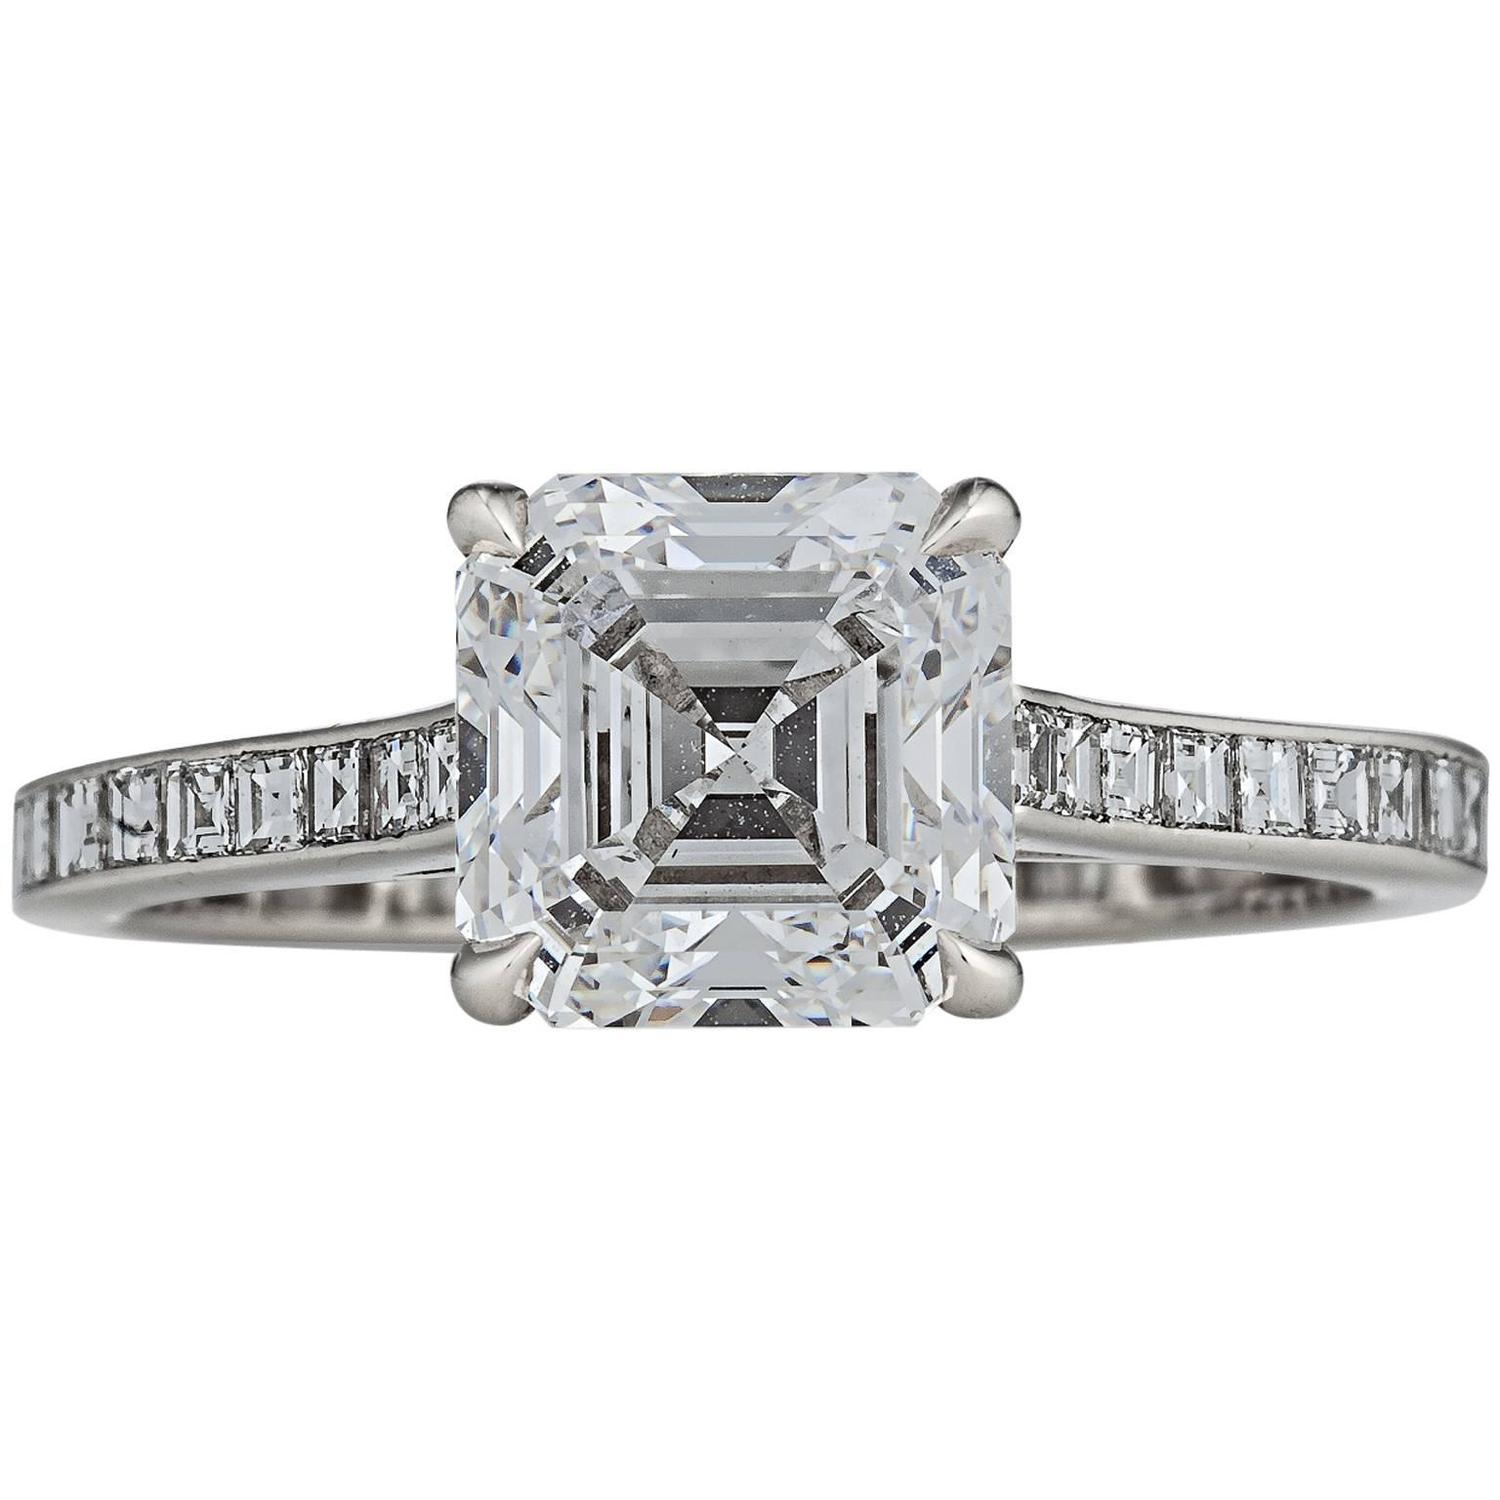 2.11 Carat Square Asscher Cut Diamond Platinum Engagement Ring For Sale at 1stdibs